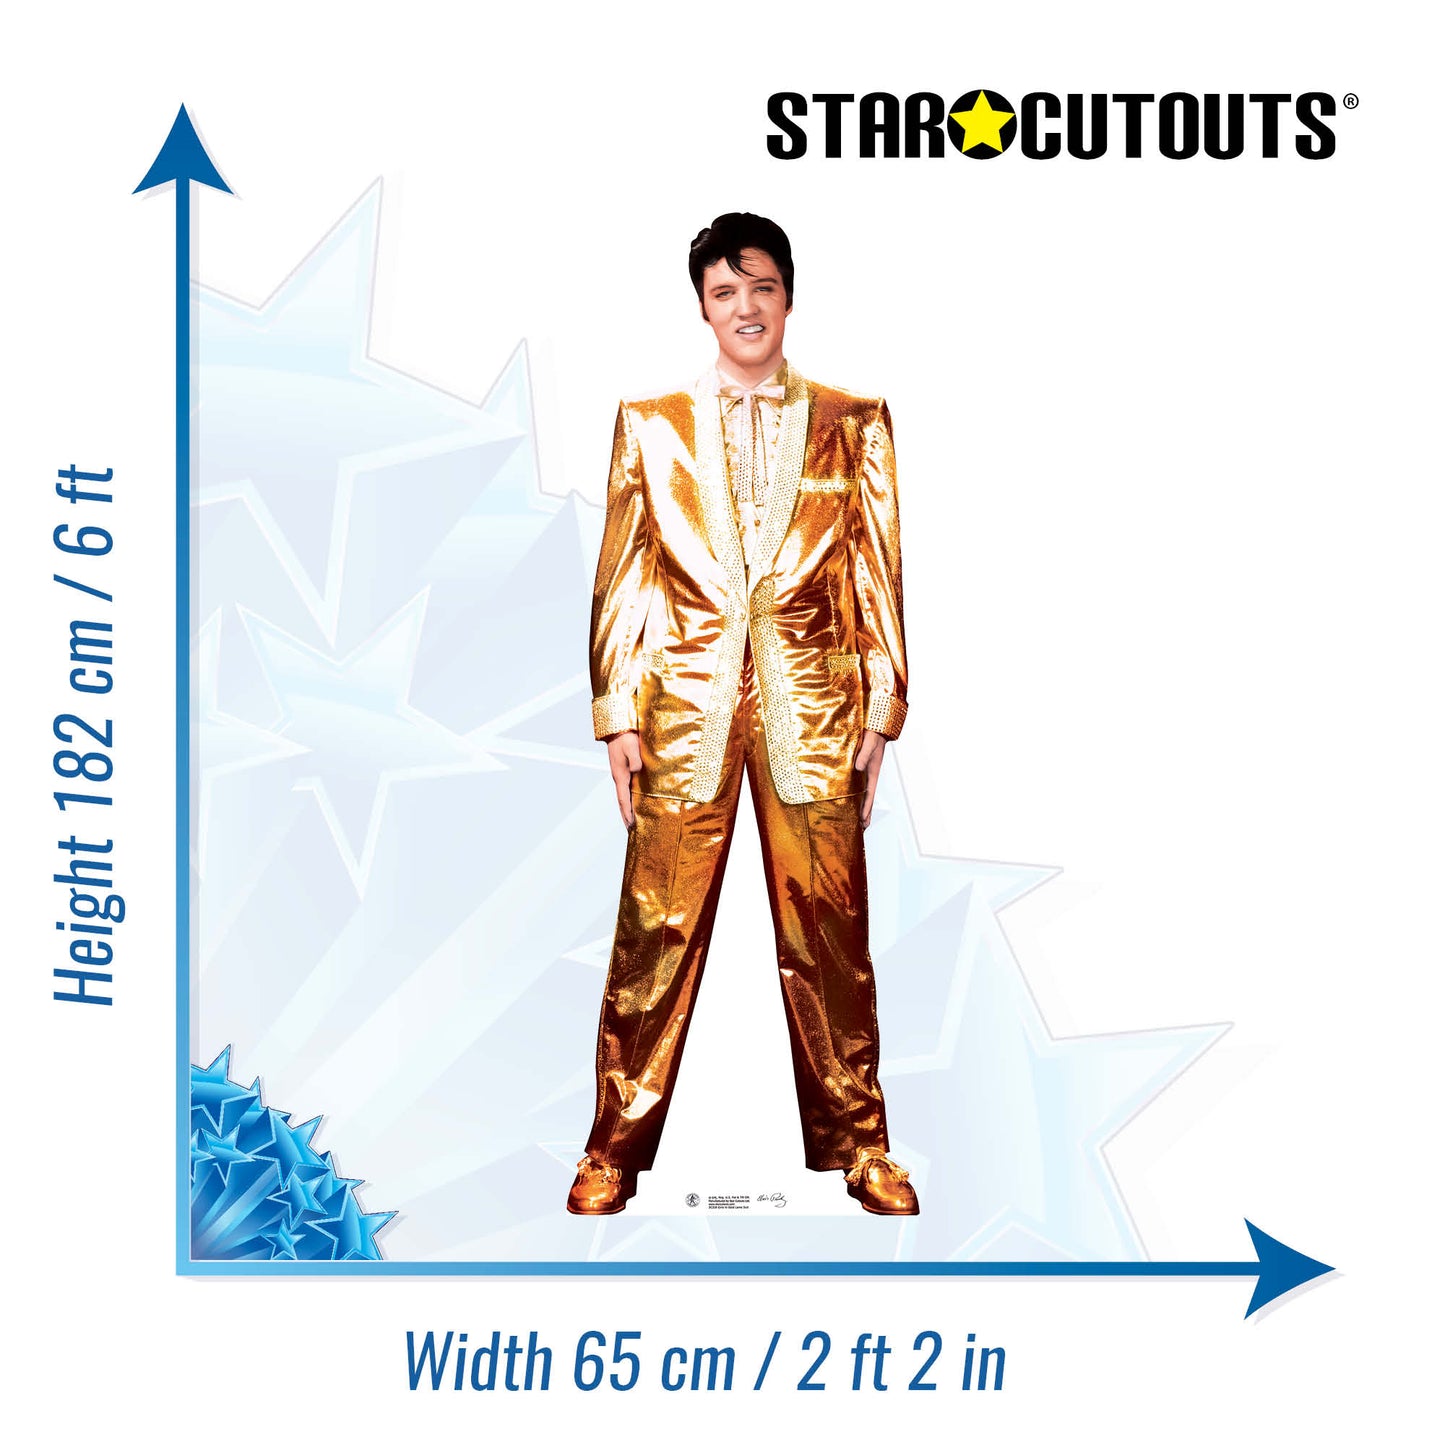 Elvis Presley Famous Gold Suit Cardboard Cutout MyCardboardCutout